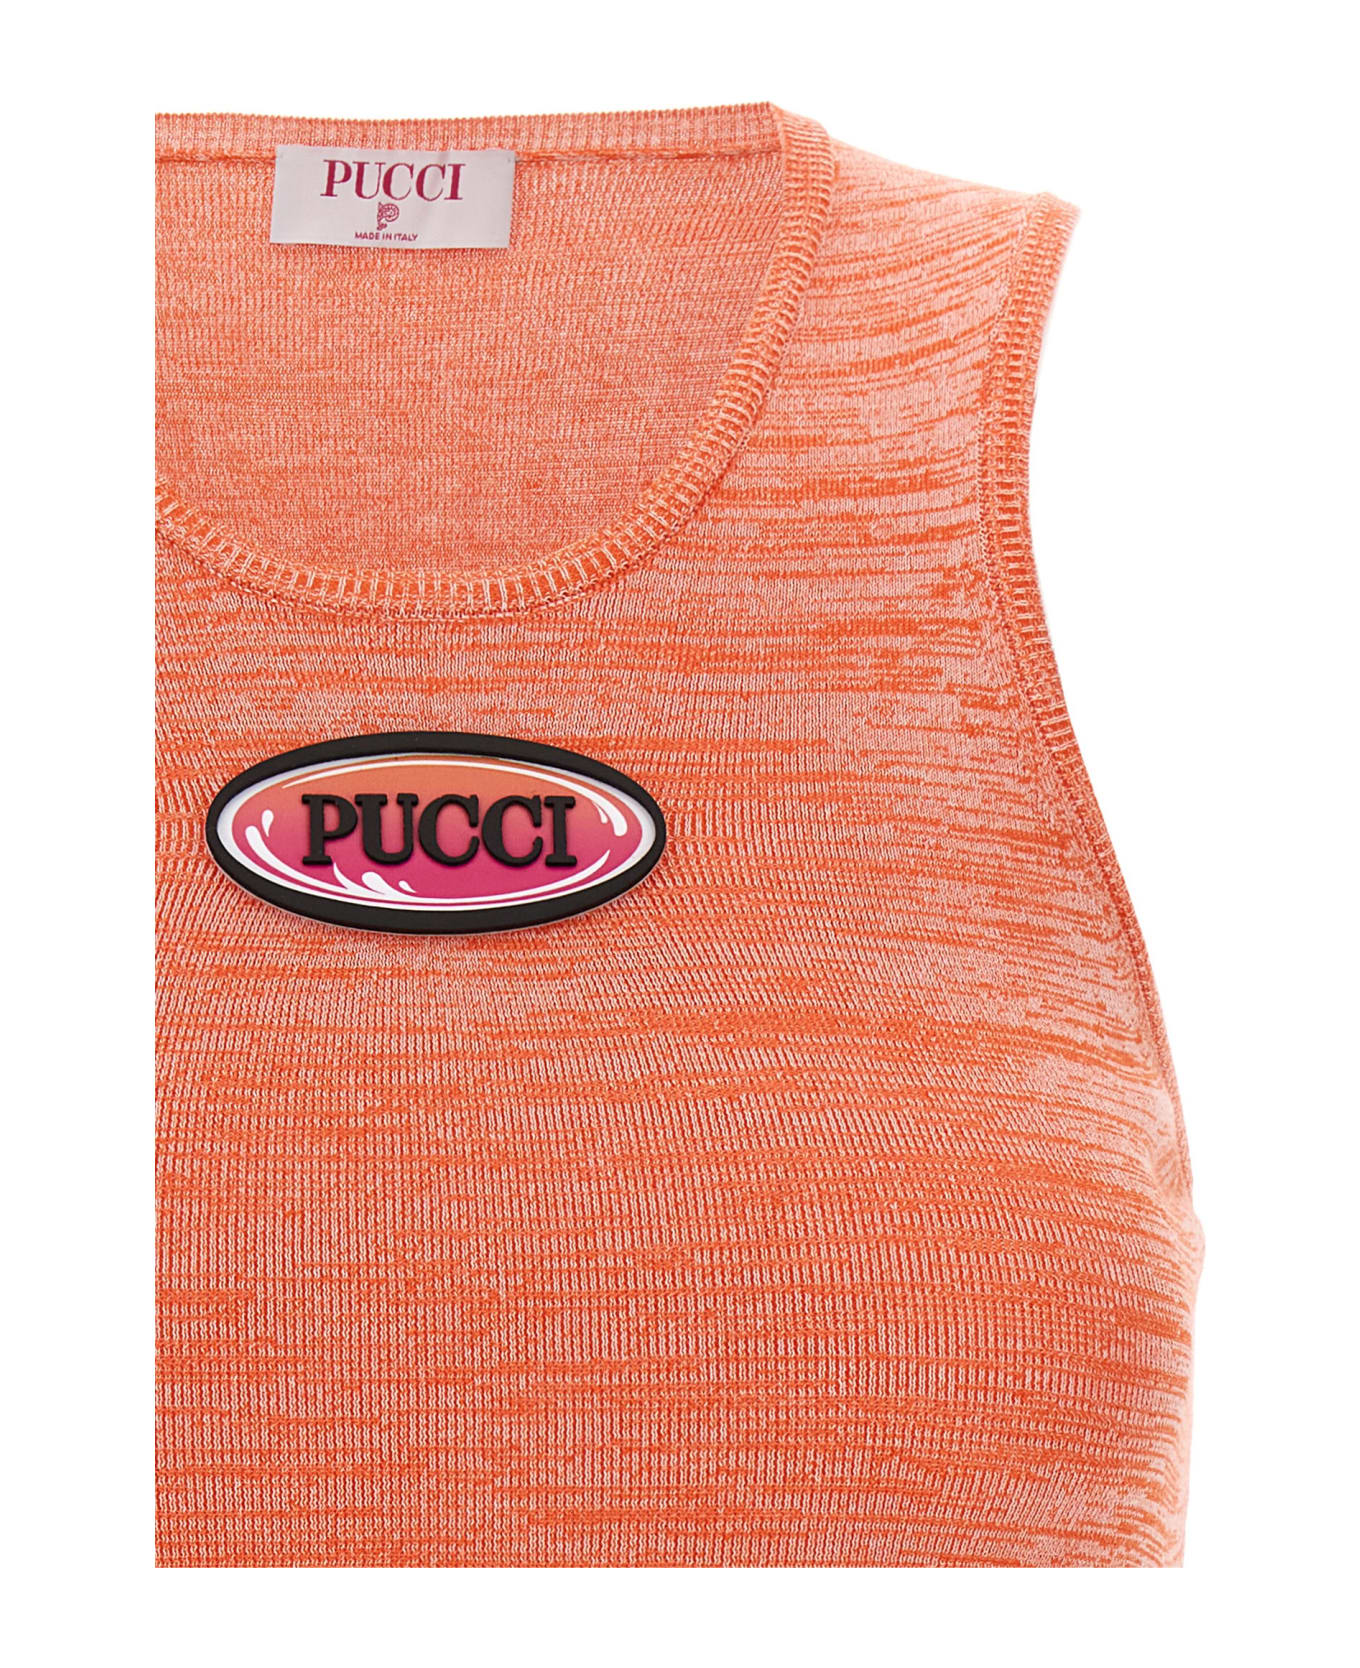 Pucci Logo Top - Pink